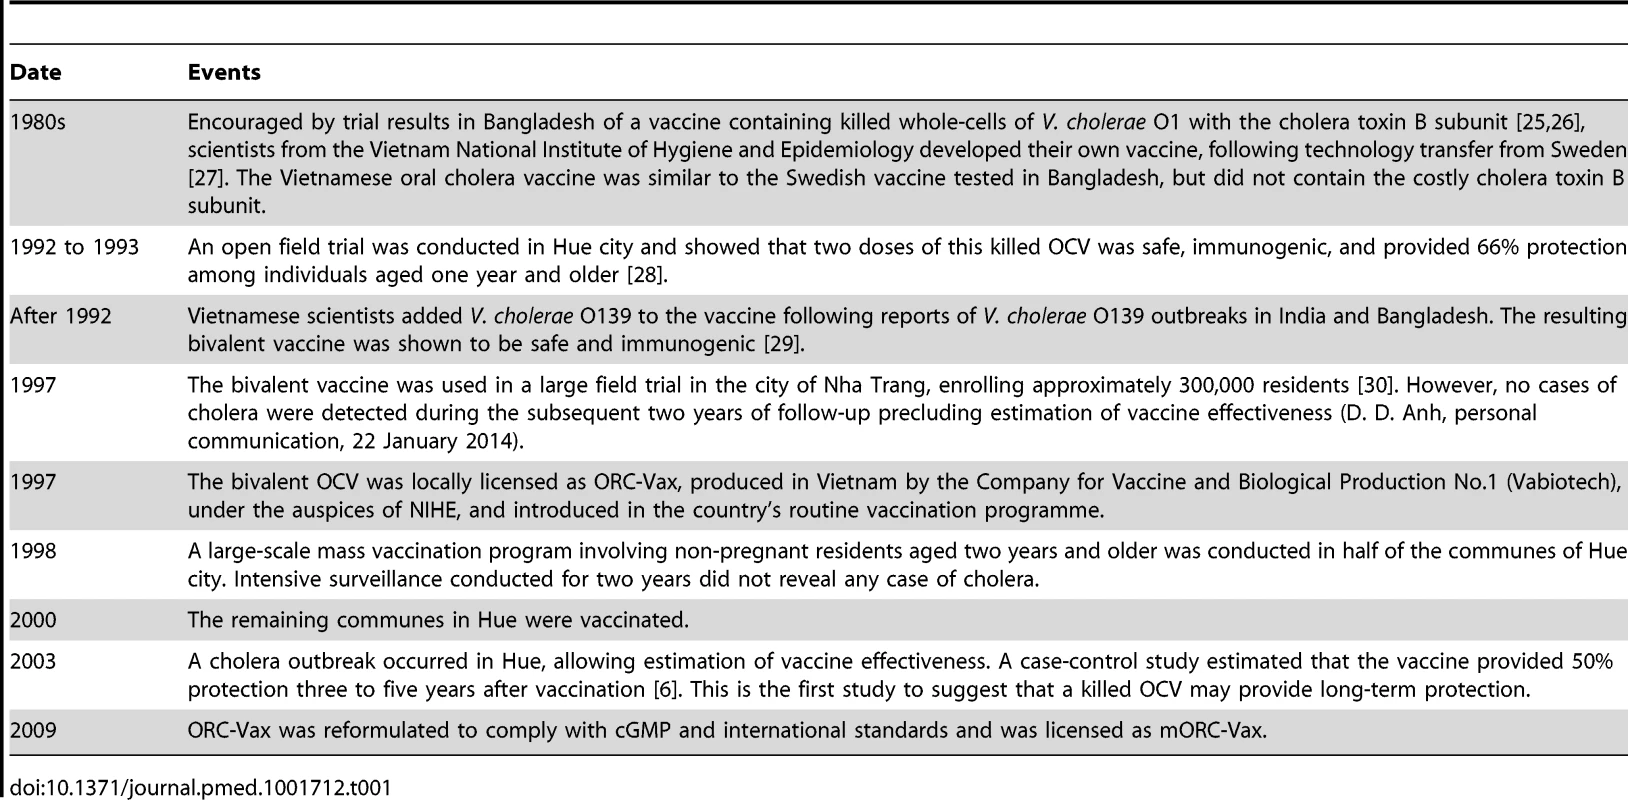 History of the development of oral cholera vaccine in Vietnam.